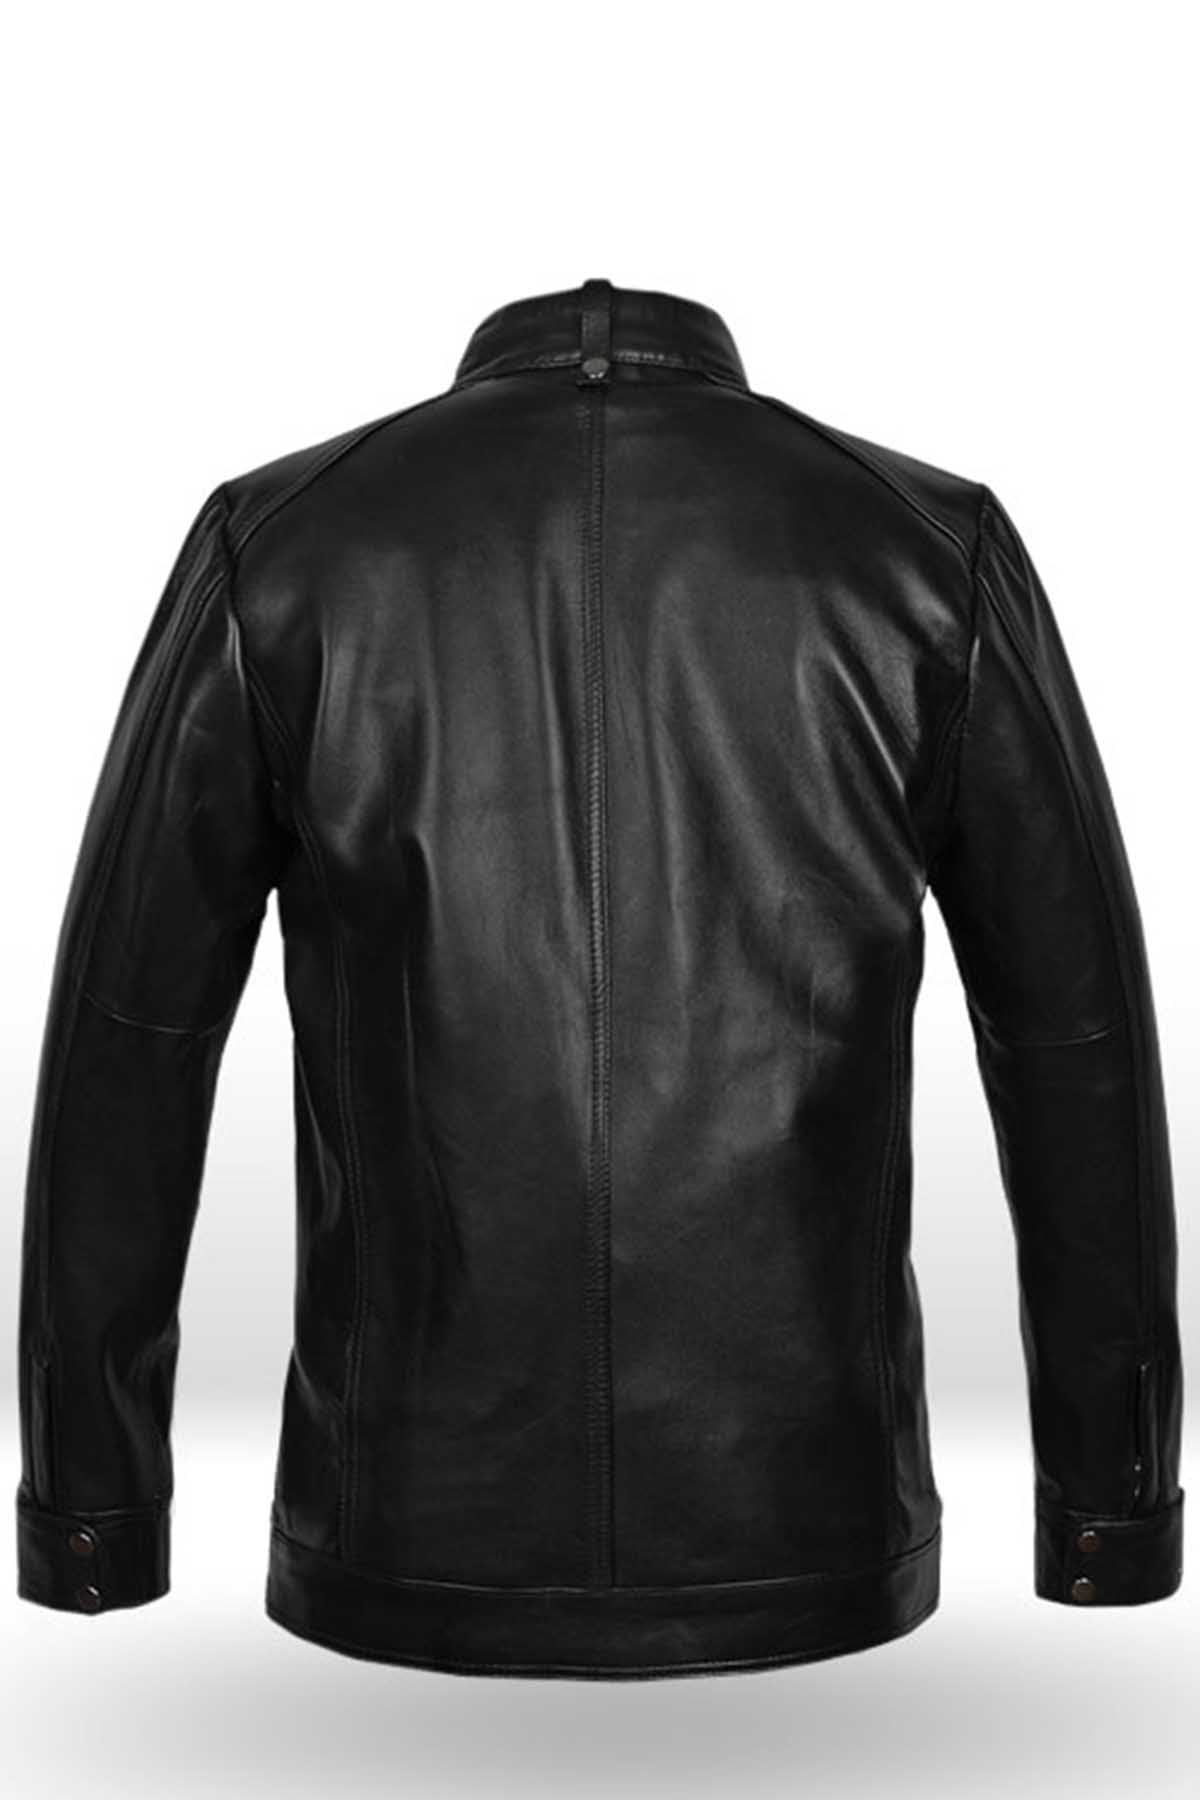 Impressive Bradley Cooper Leather Jacket